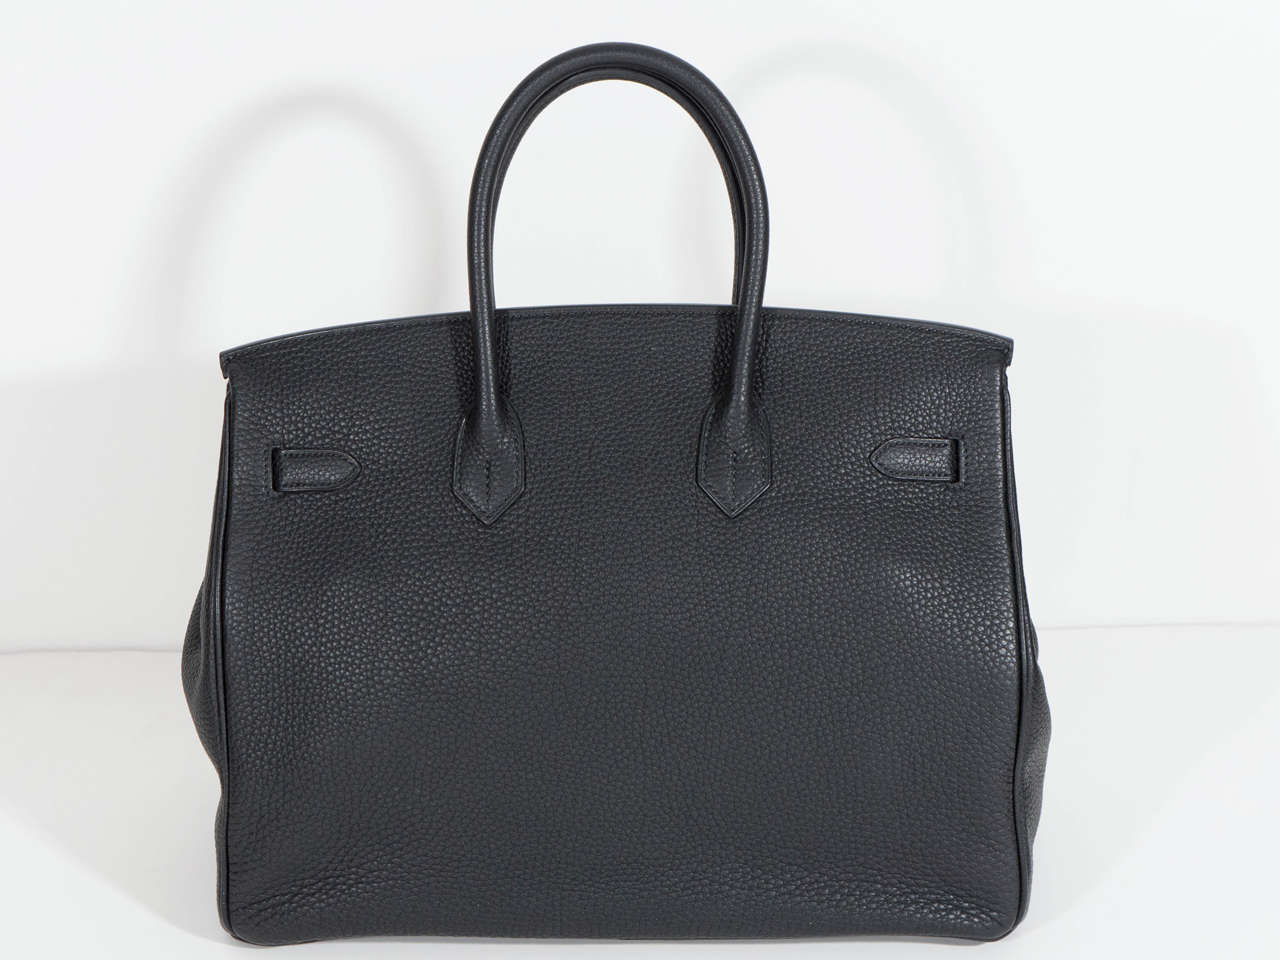 Hermès Birkin Bag in Black Togo Leather with Palladium Hardware, 2009 For Sale 1